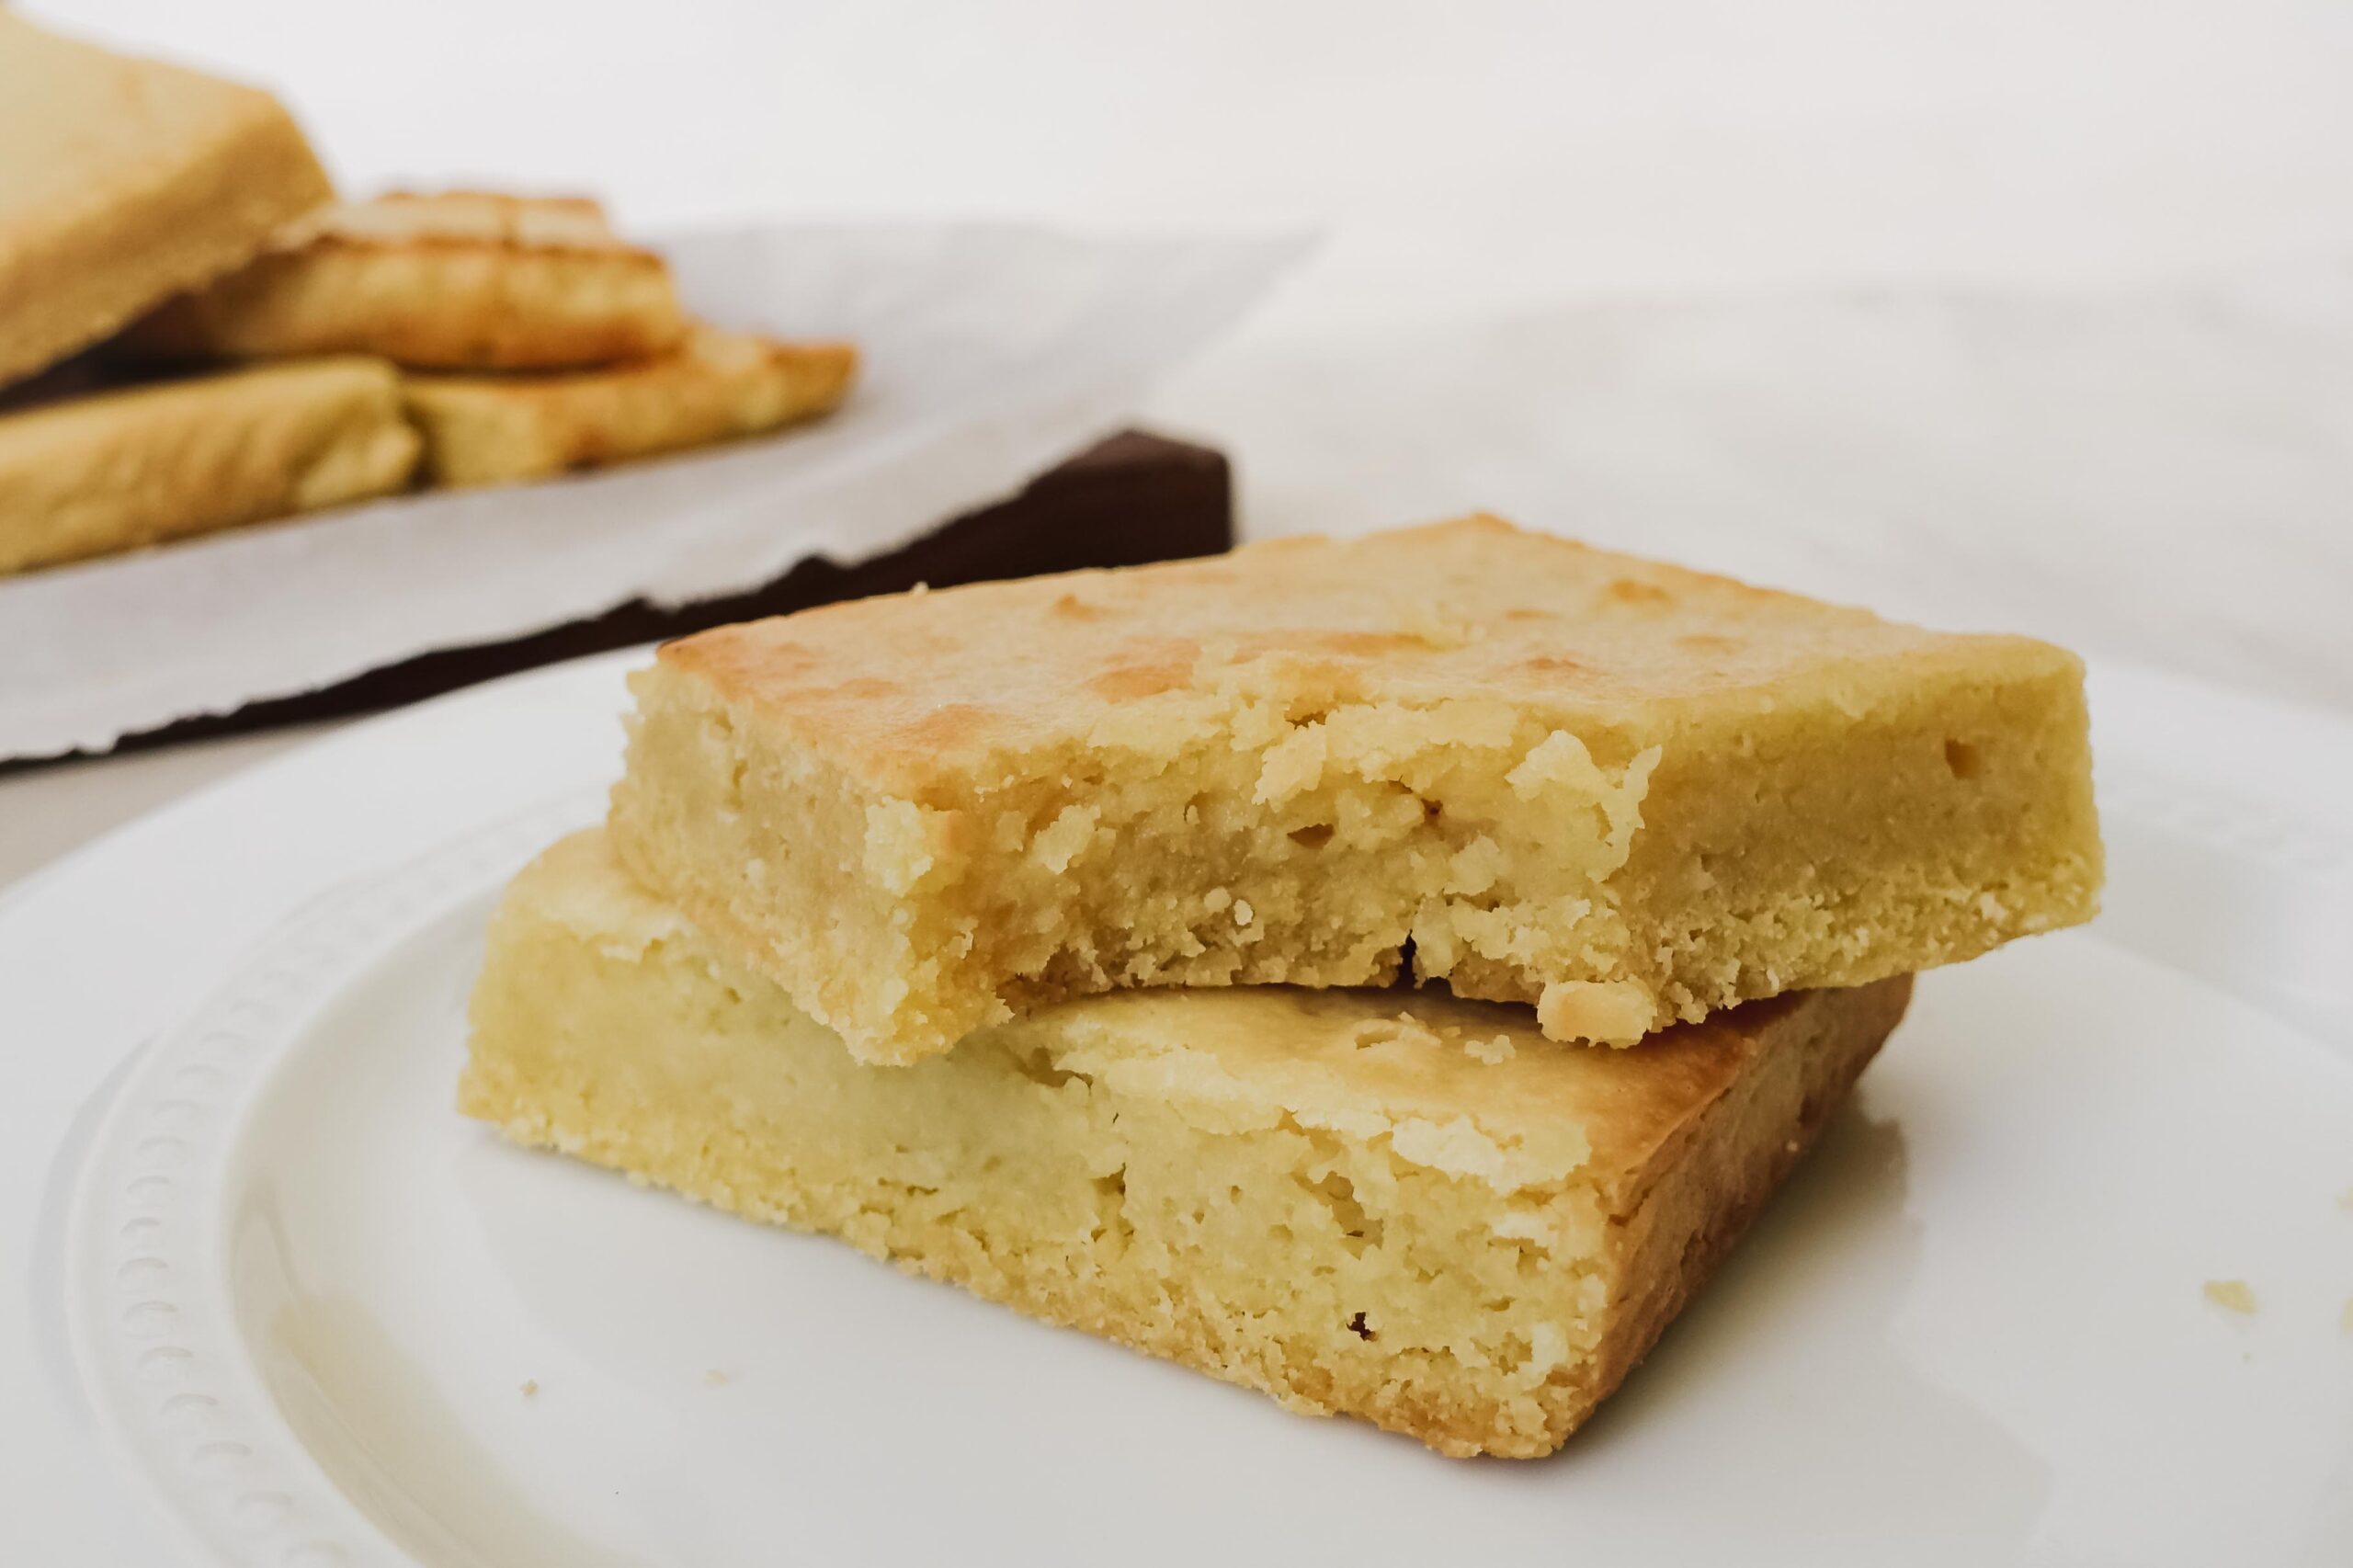 Gooey butter cake - Wikipedia